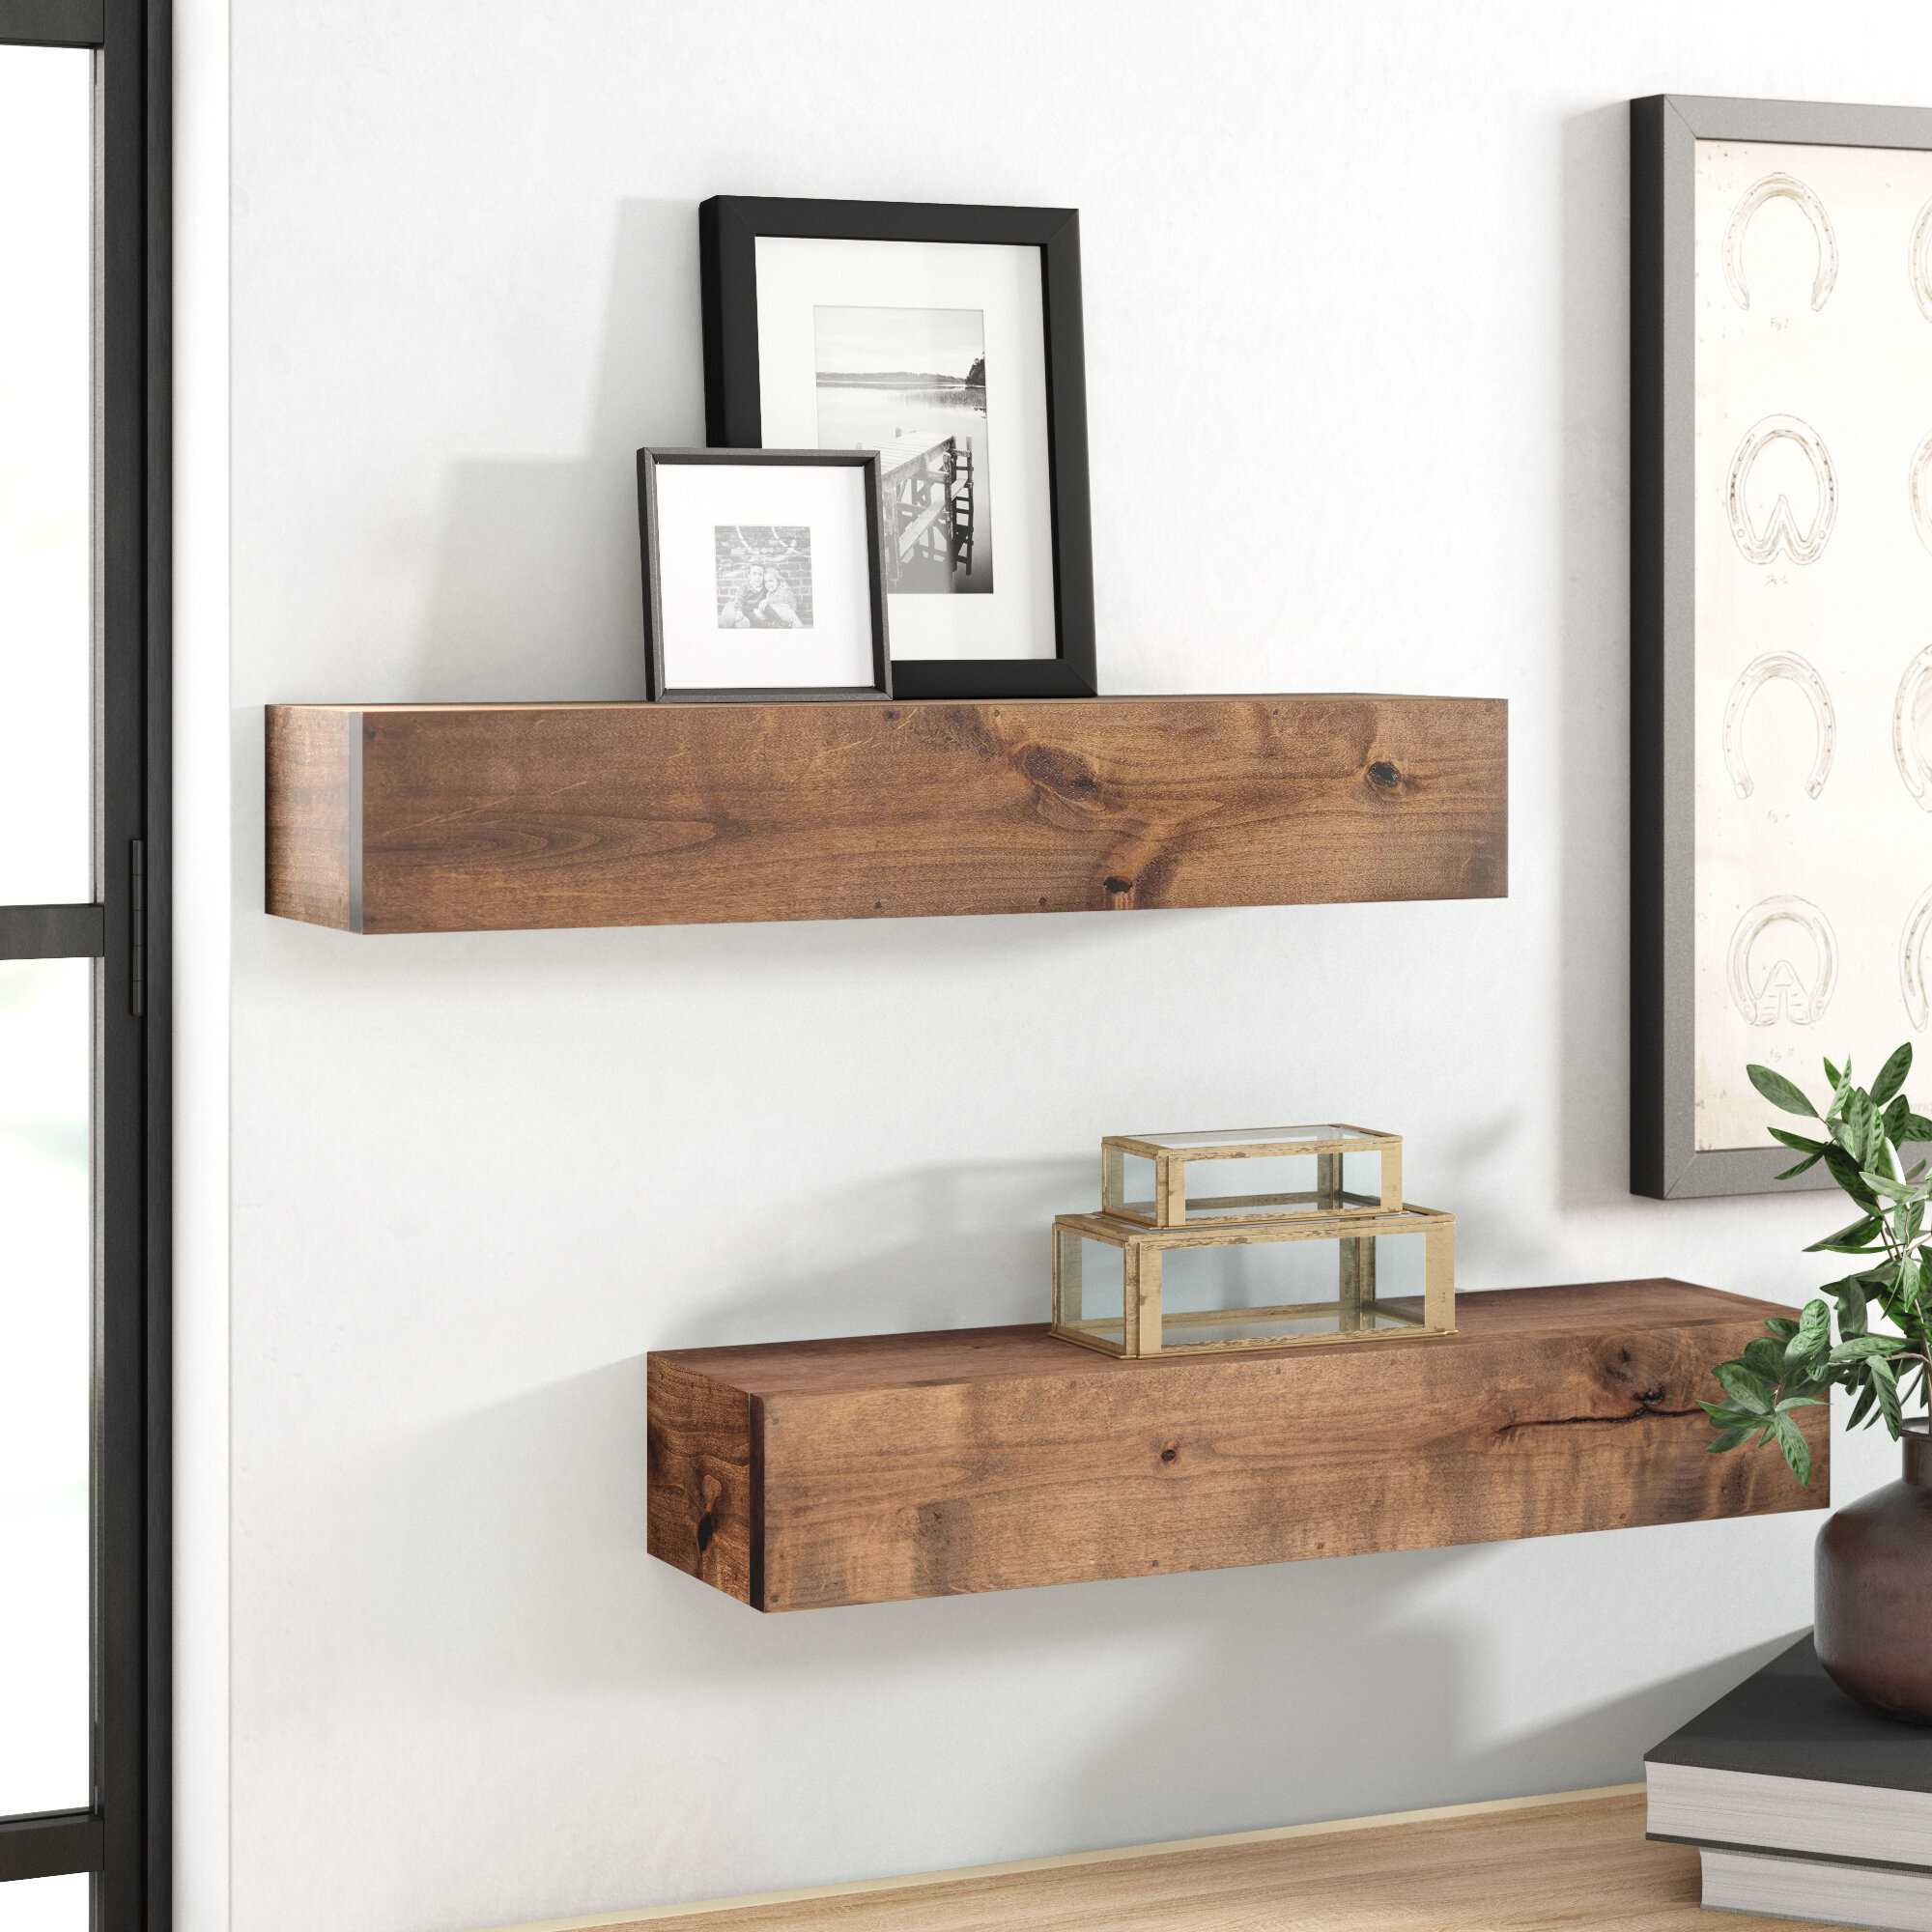 3 PCS Wall Hanging Shelf Shelves Wood for Bathroom Living Room Bedroom Office 